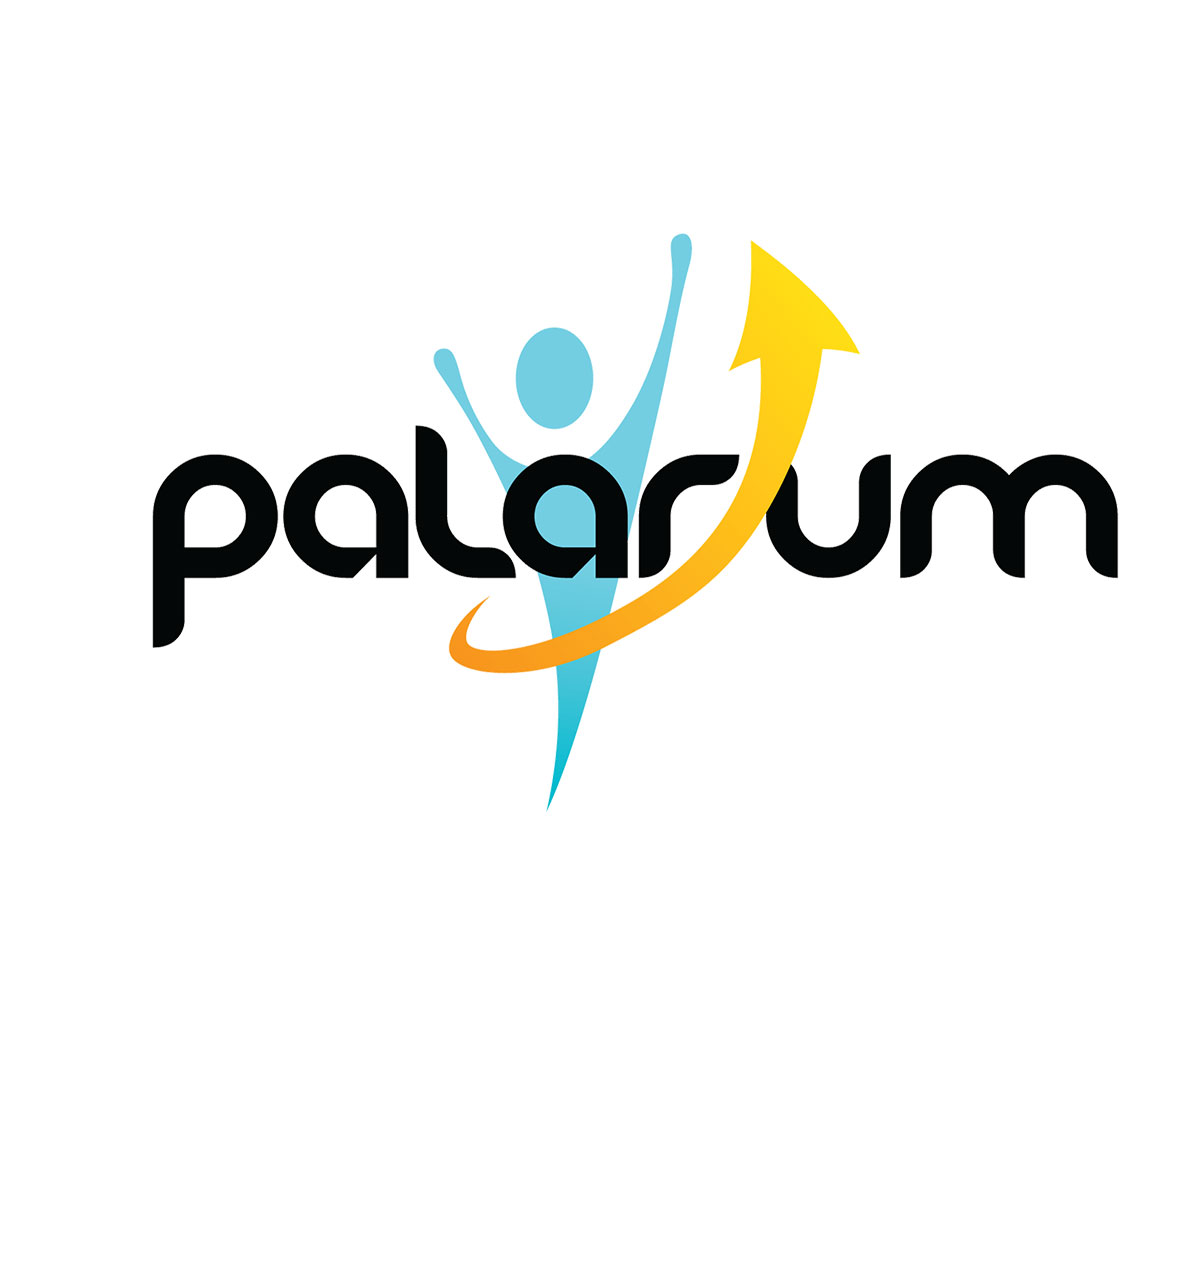 Palarum logo for leadership